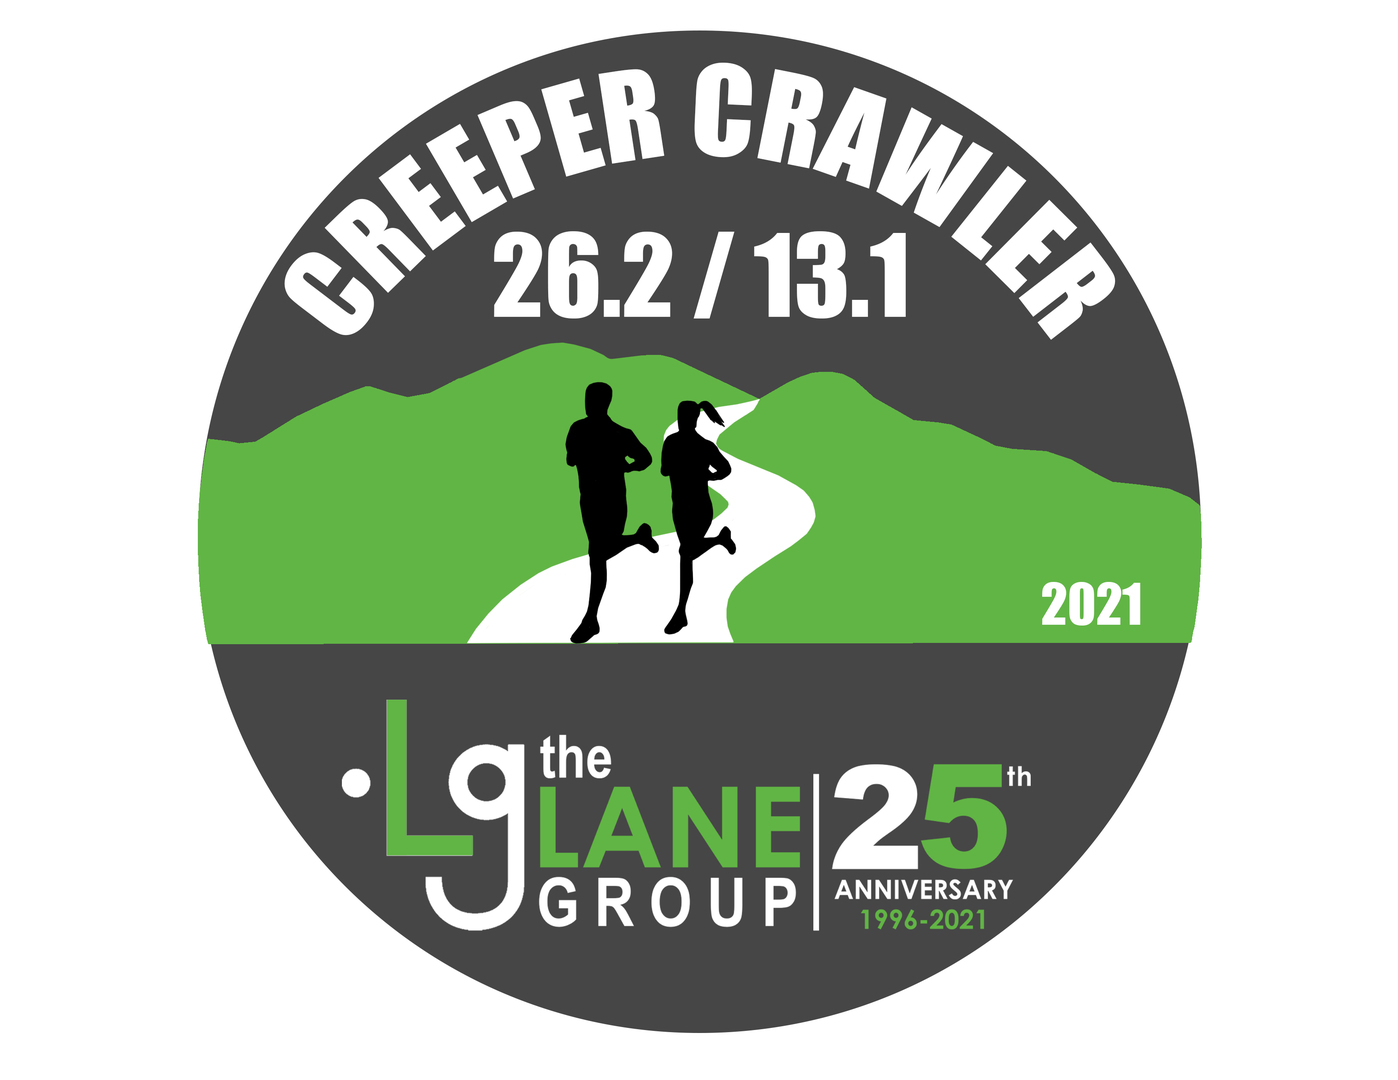 TLG Creeper Crawler Marathon and Half Marathon logo on RaceRaves